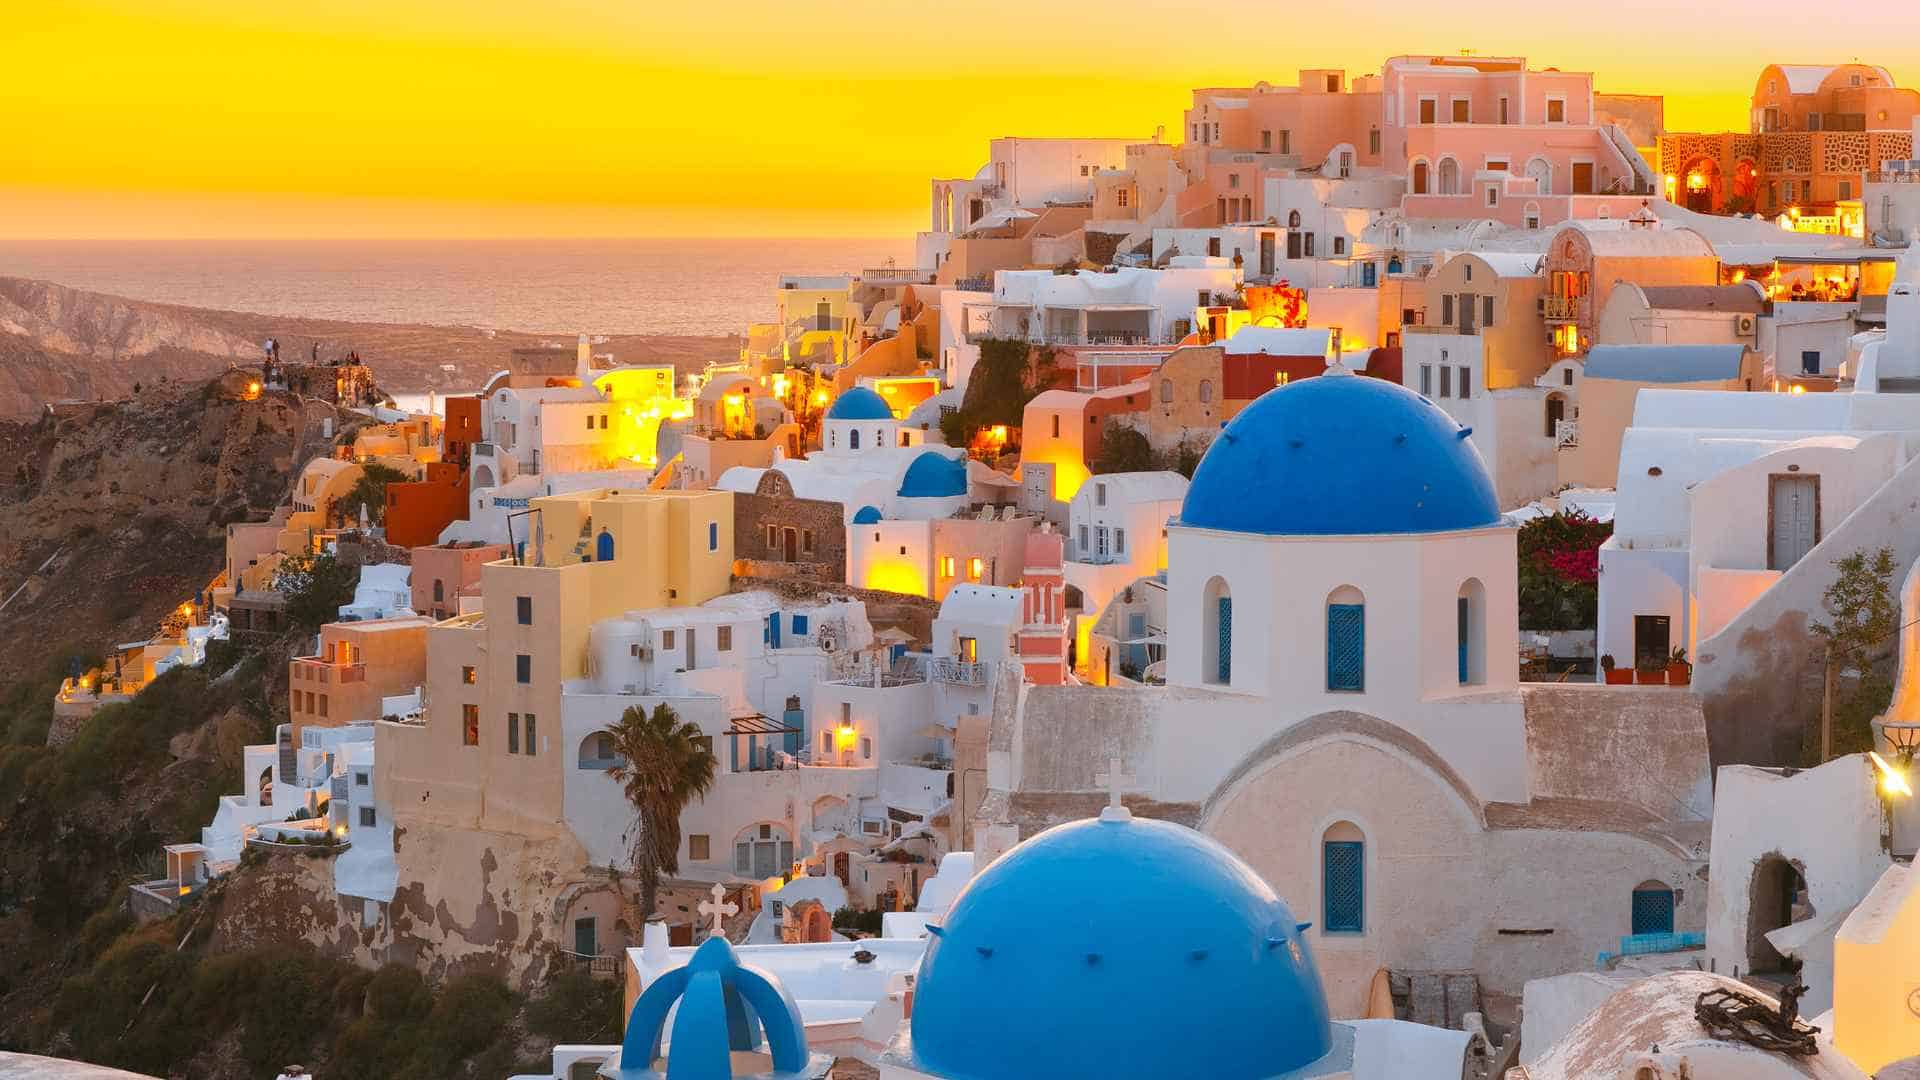  Sunset at Santorini, Greece